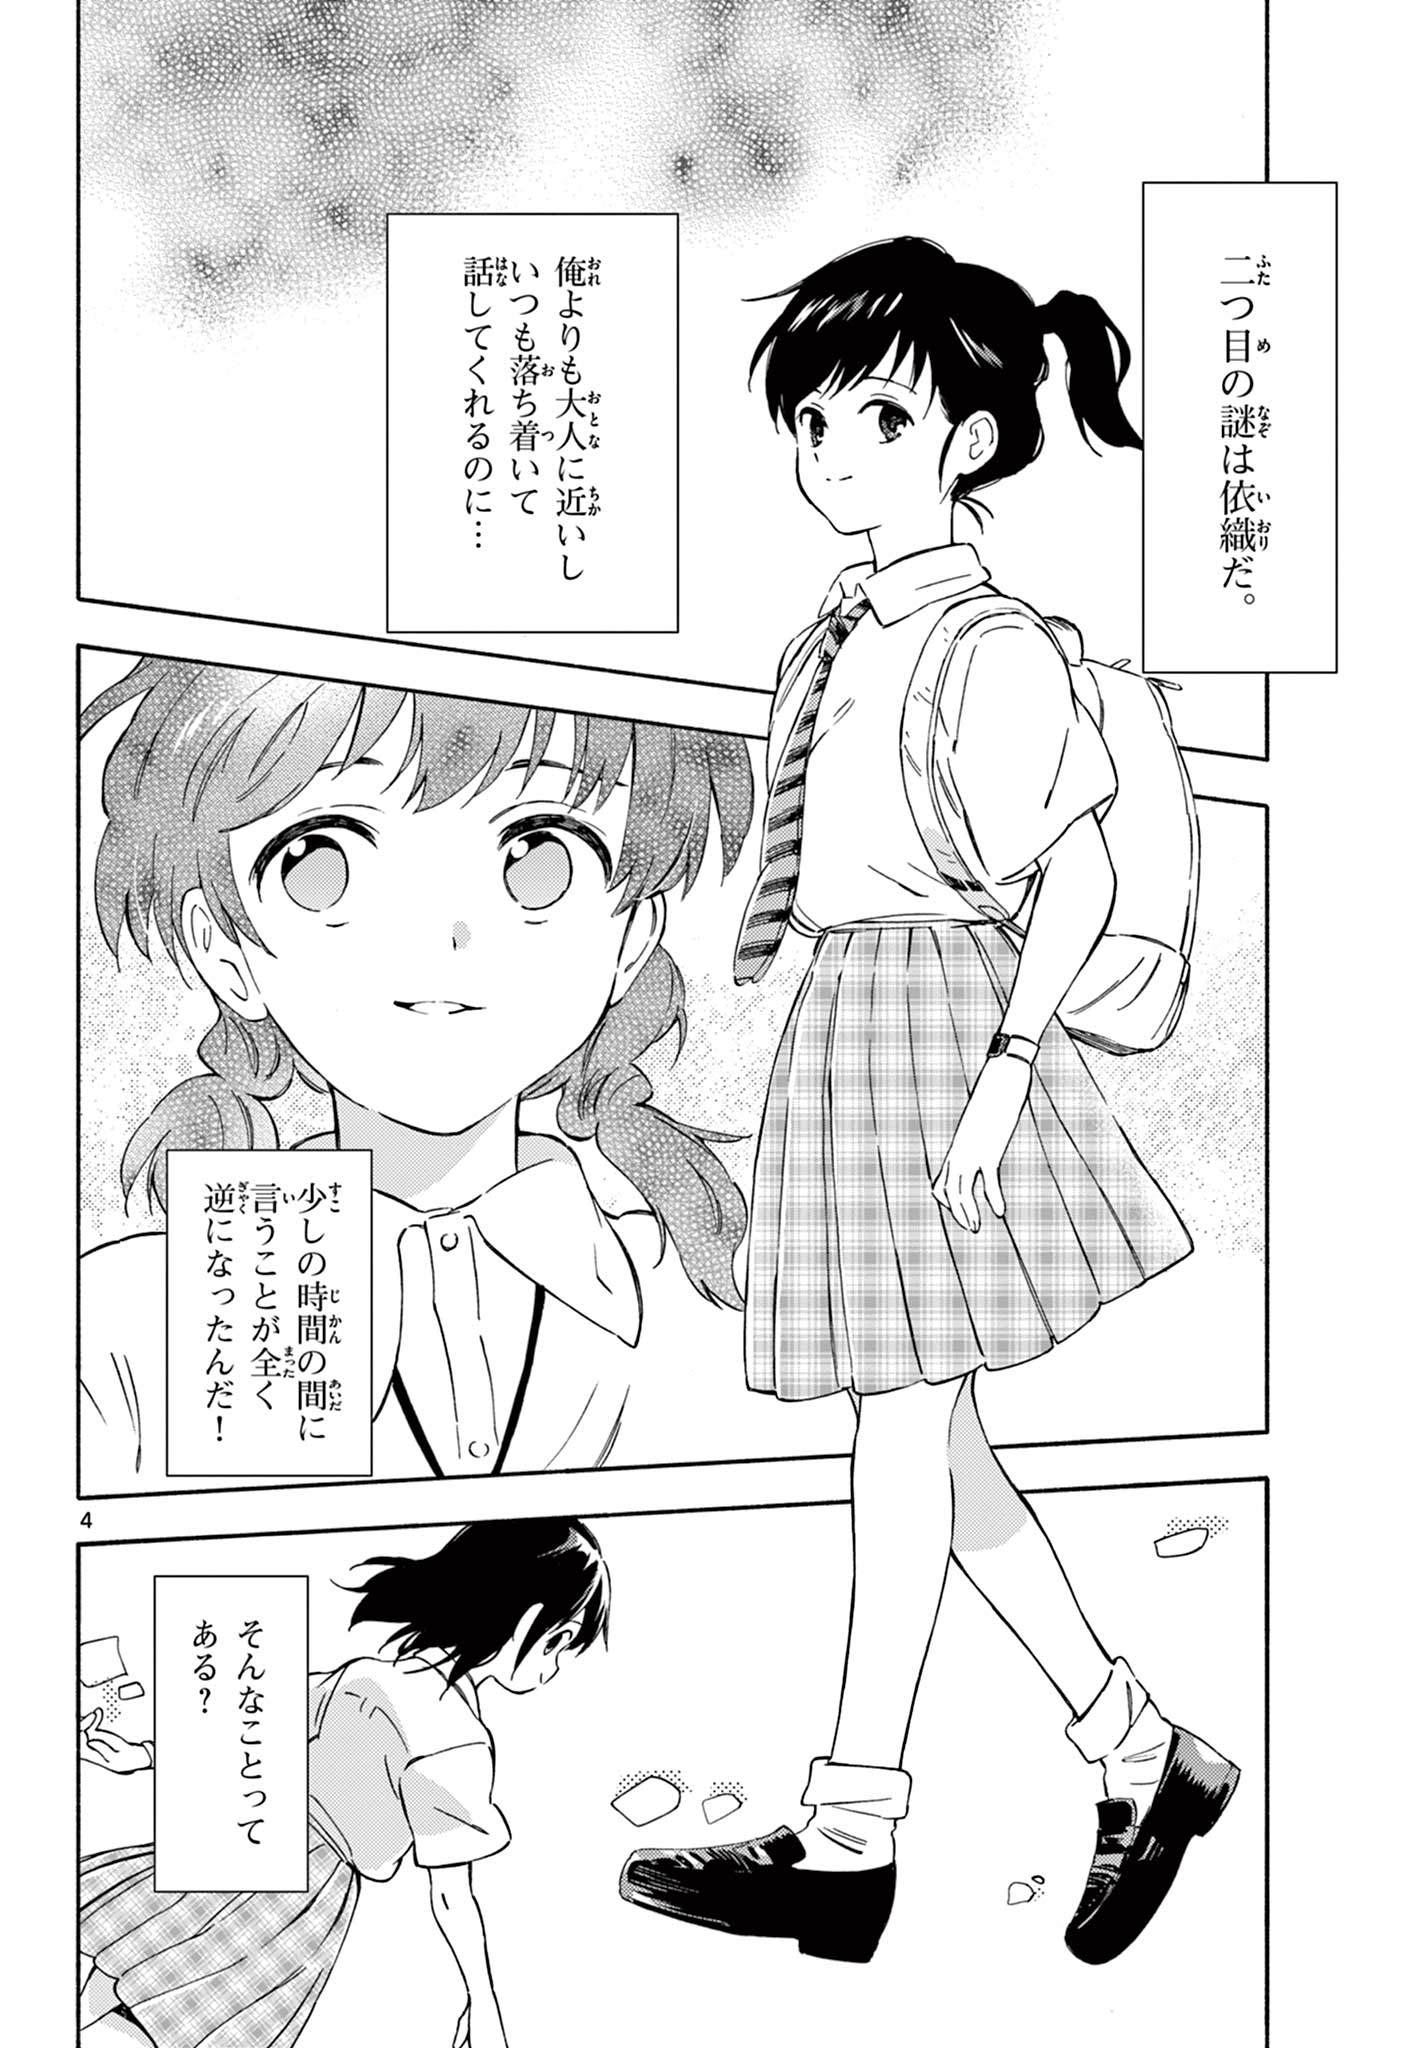 Nami no Shijima no Horizont - Chapter 9.1 - Page 4